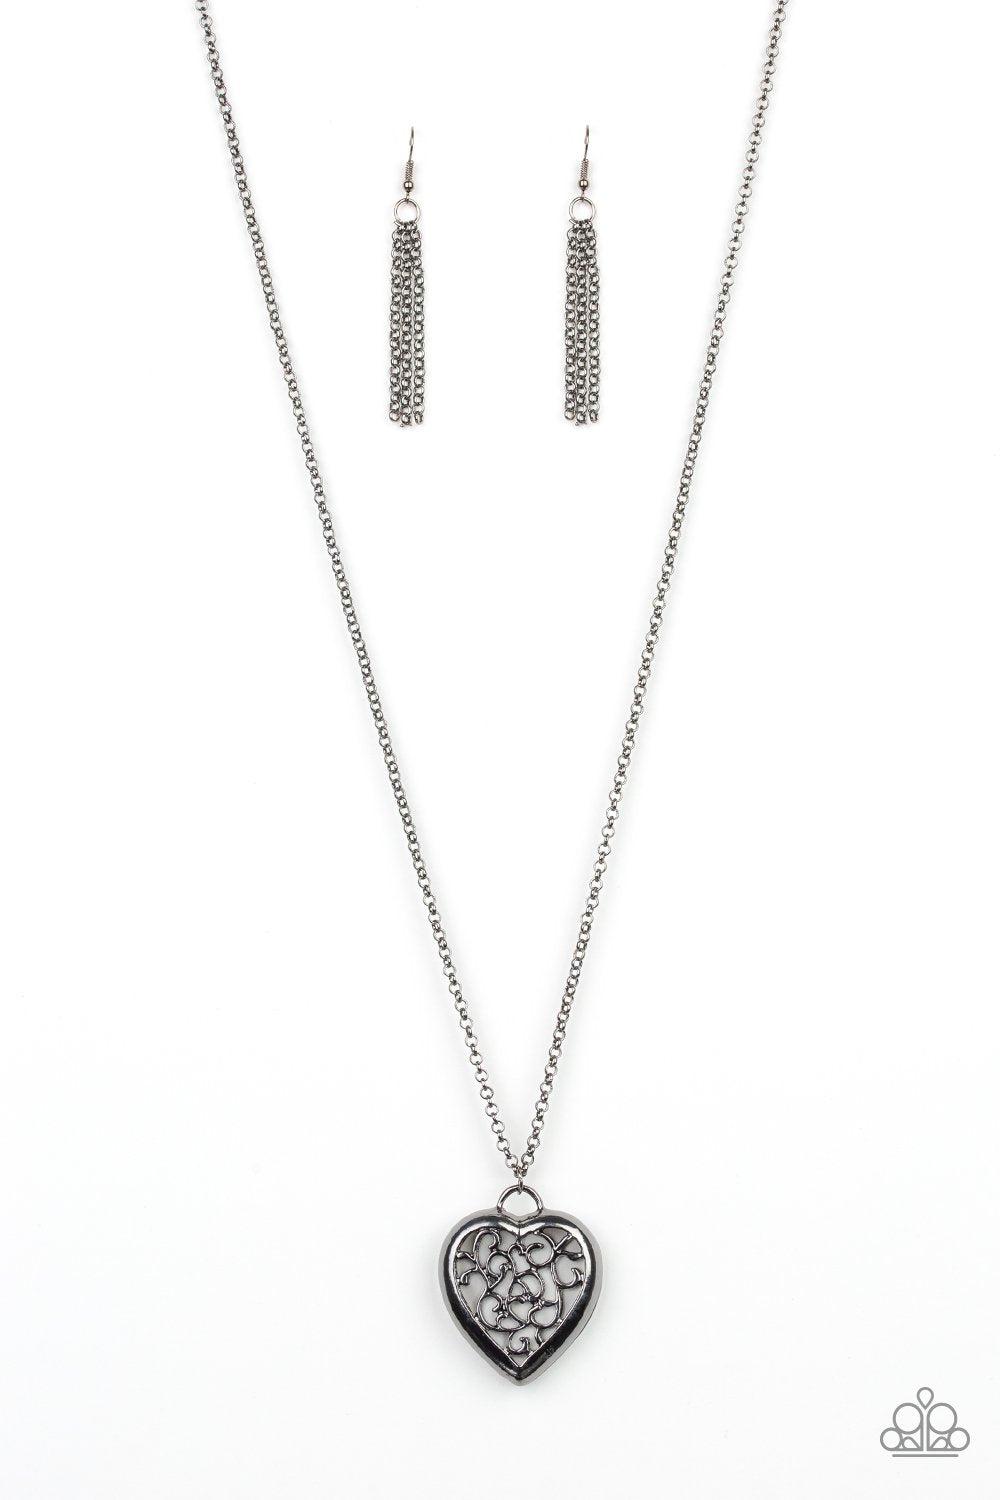 Victorian Valentine Gunmetal Black Filigree Heart Necklace - Paparazzi Accessories- lightbox - CarasShop.com - $5 Jewelry by Cara Jewels